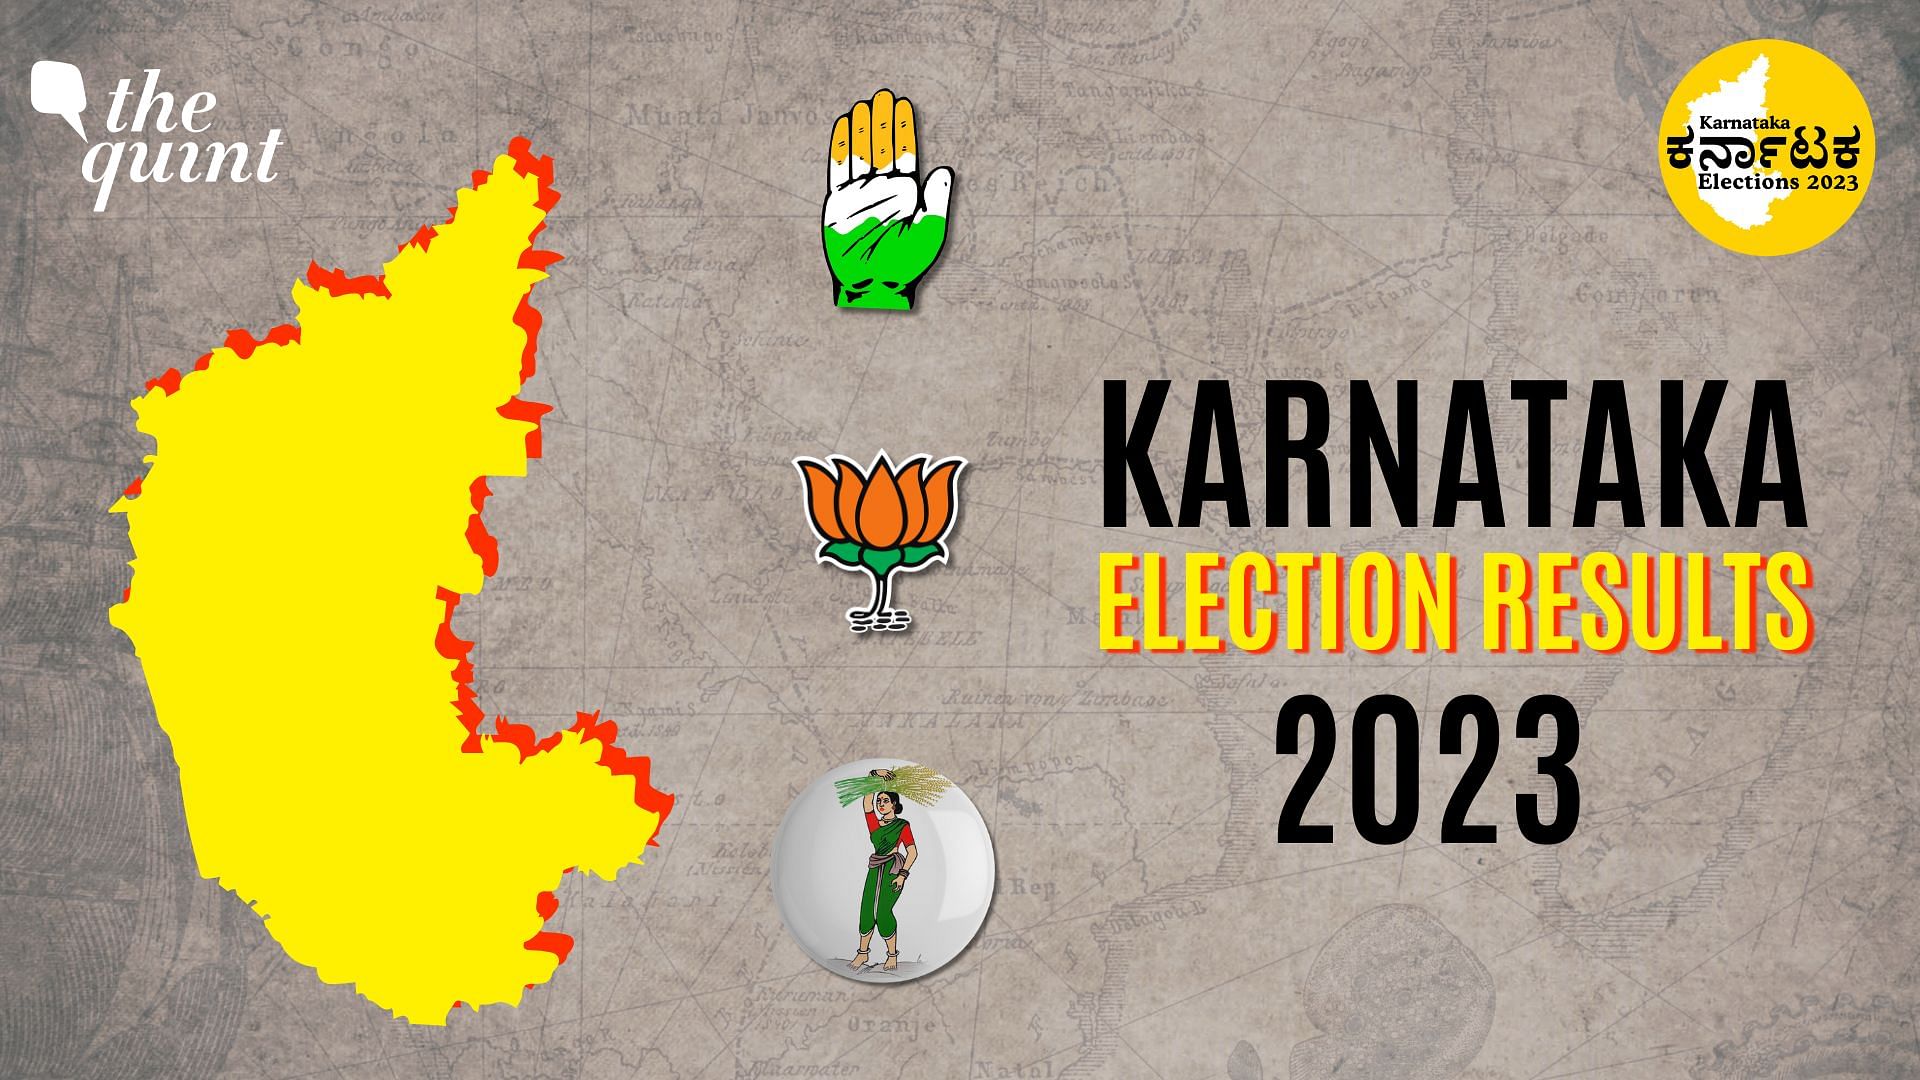 <div class="paragraphs"><p>Election Result live updates for Karnataka Assembly election 2023</p></div>